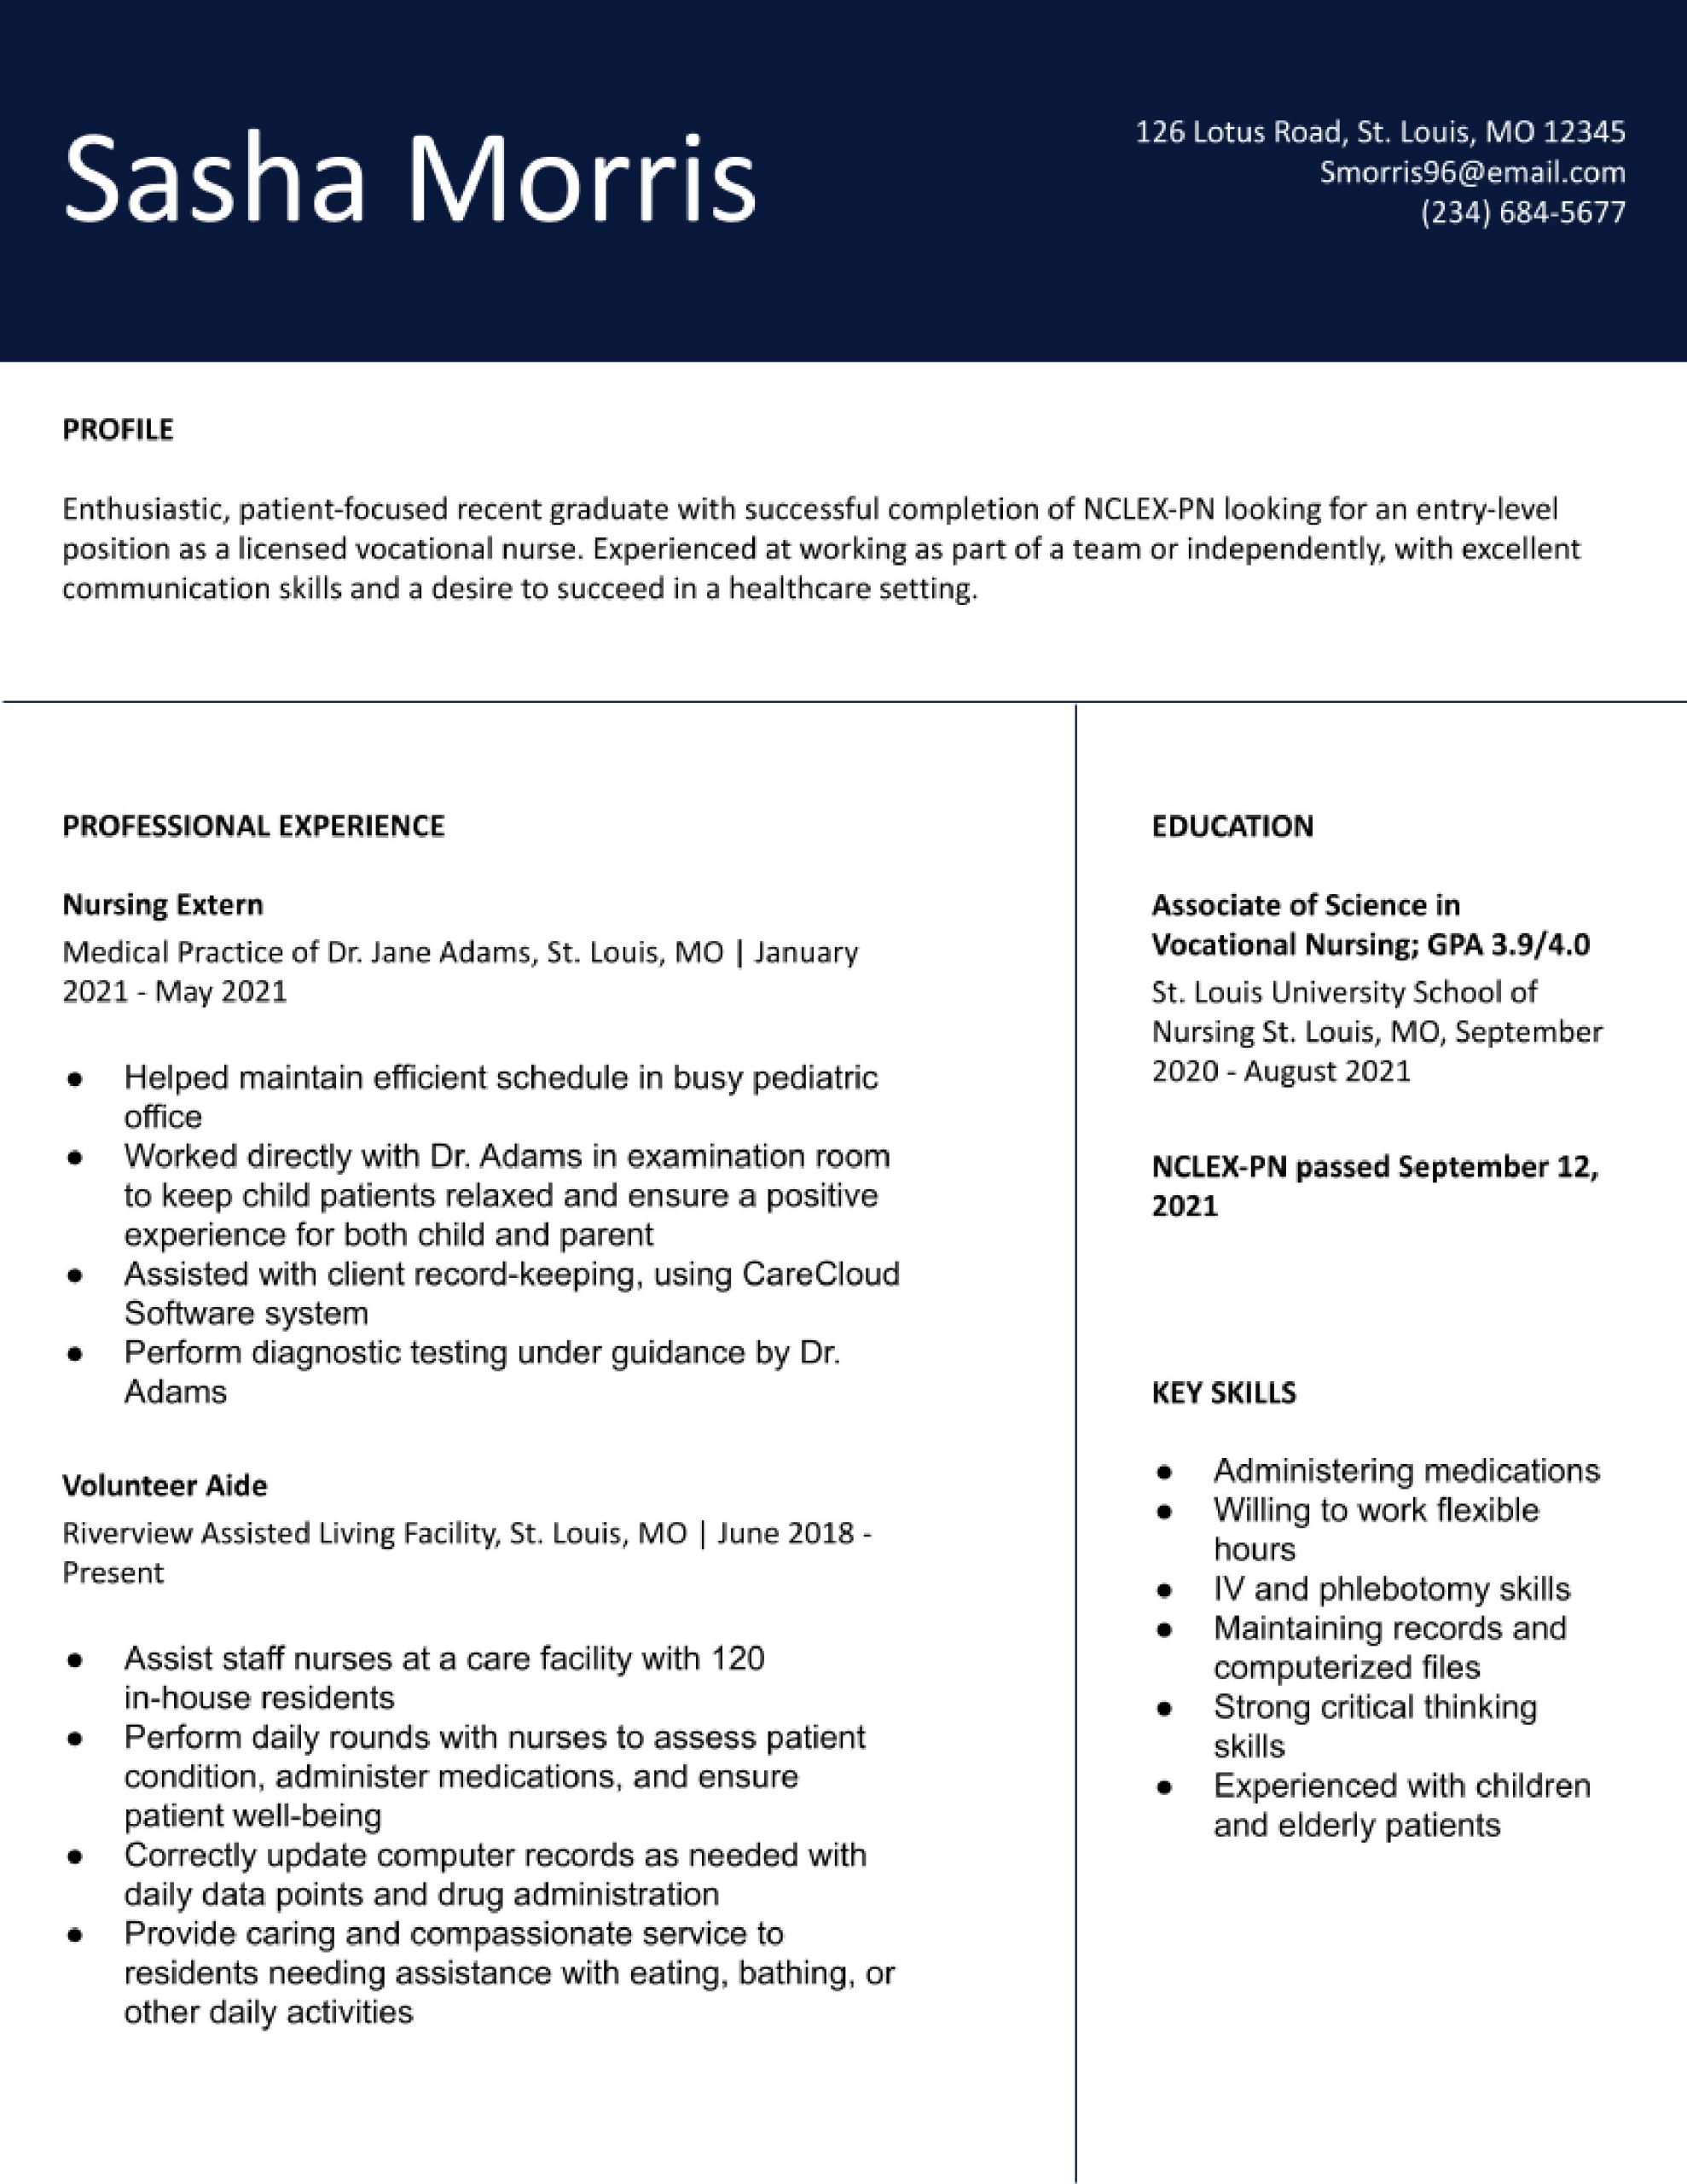 Sample Resume for Entry Level Licensed Practical Nurse Licensed Vocational Nurse (lvn) Resume Examples Of 2022 …